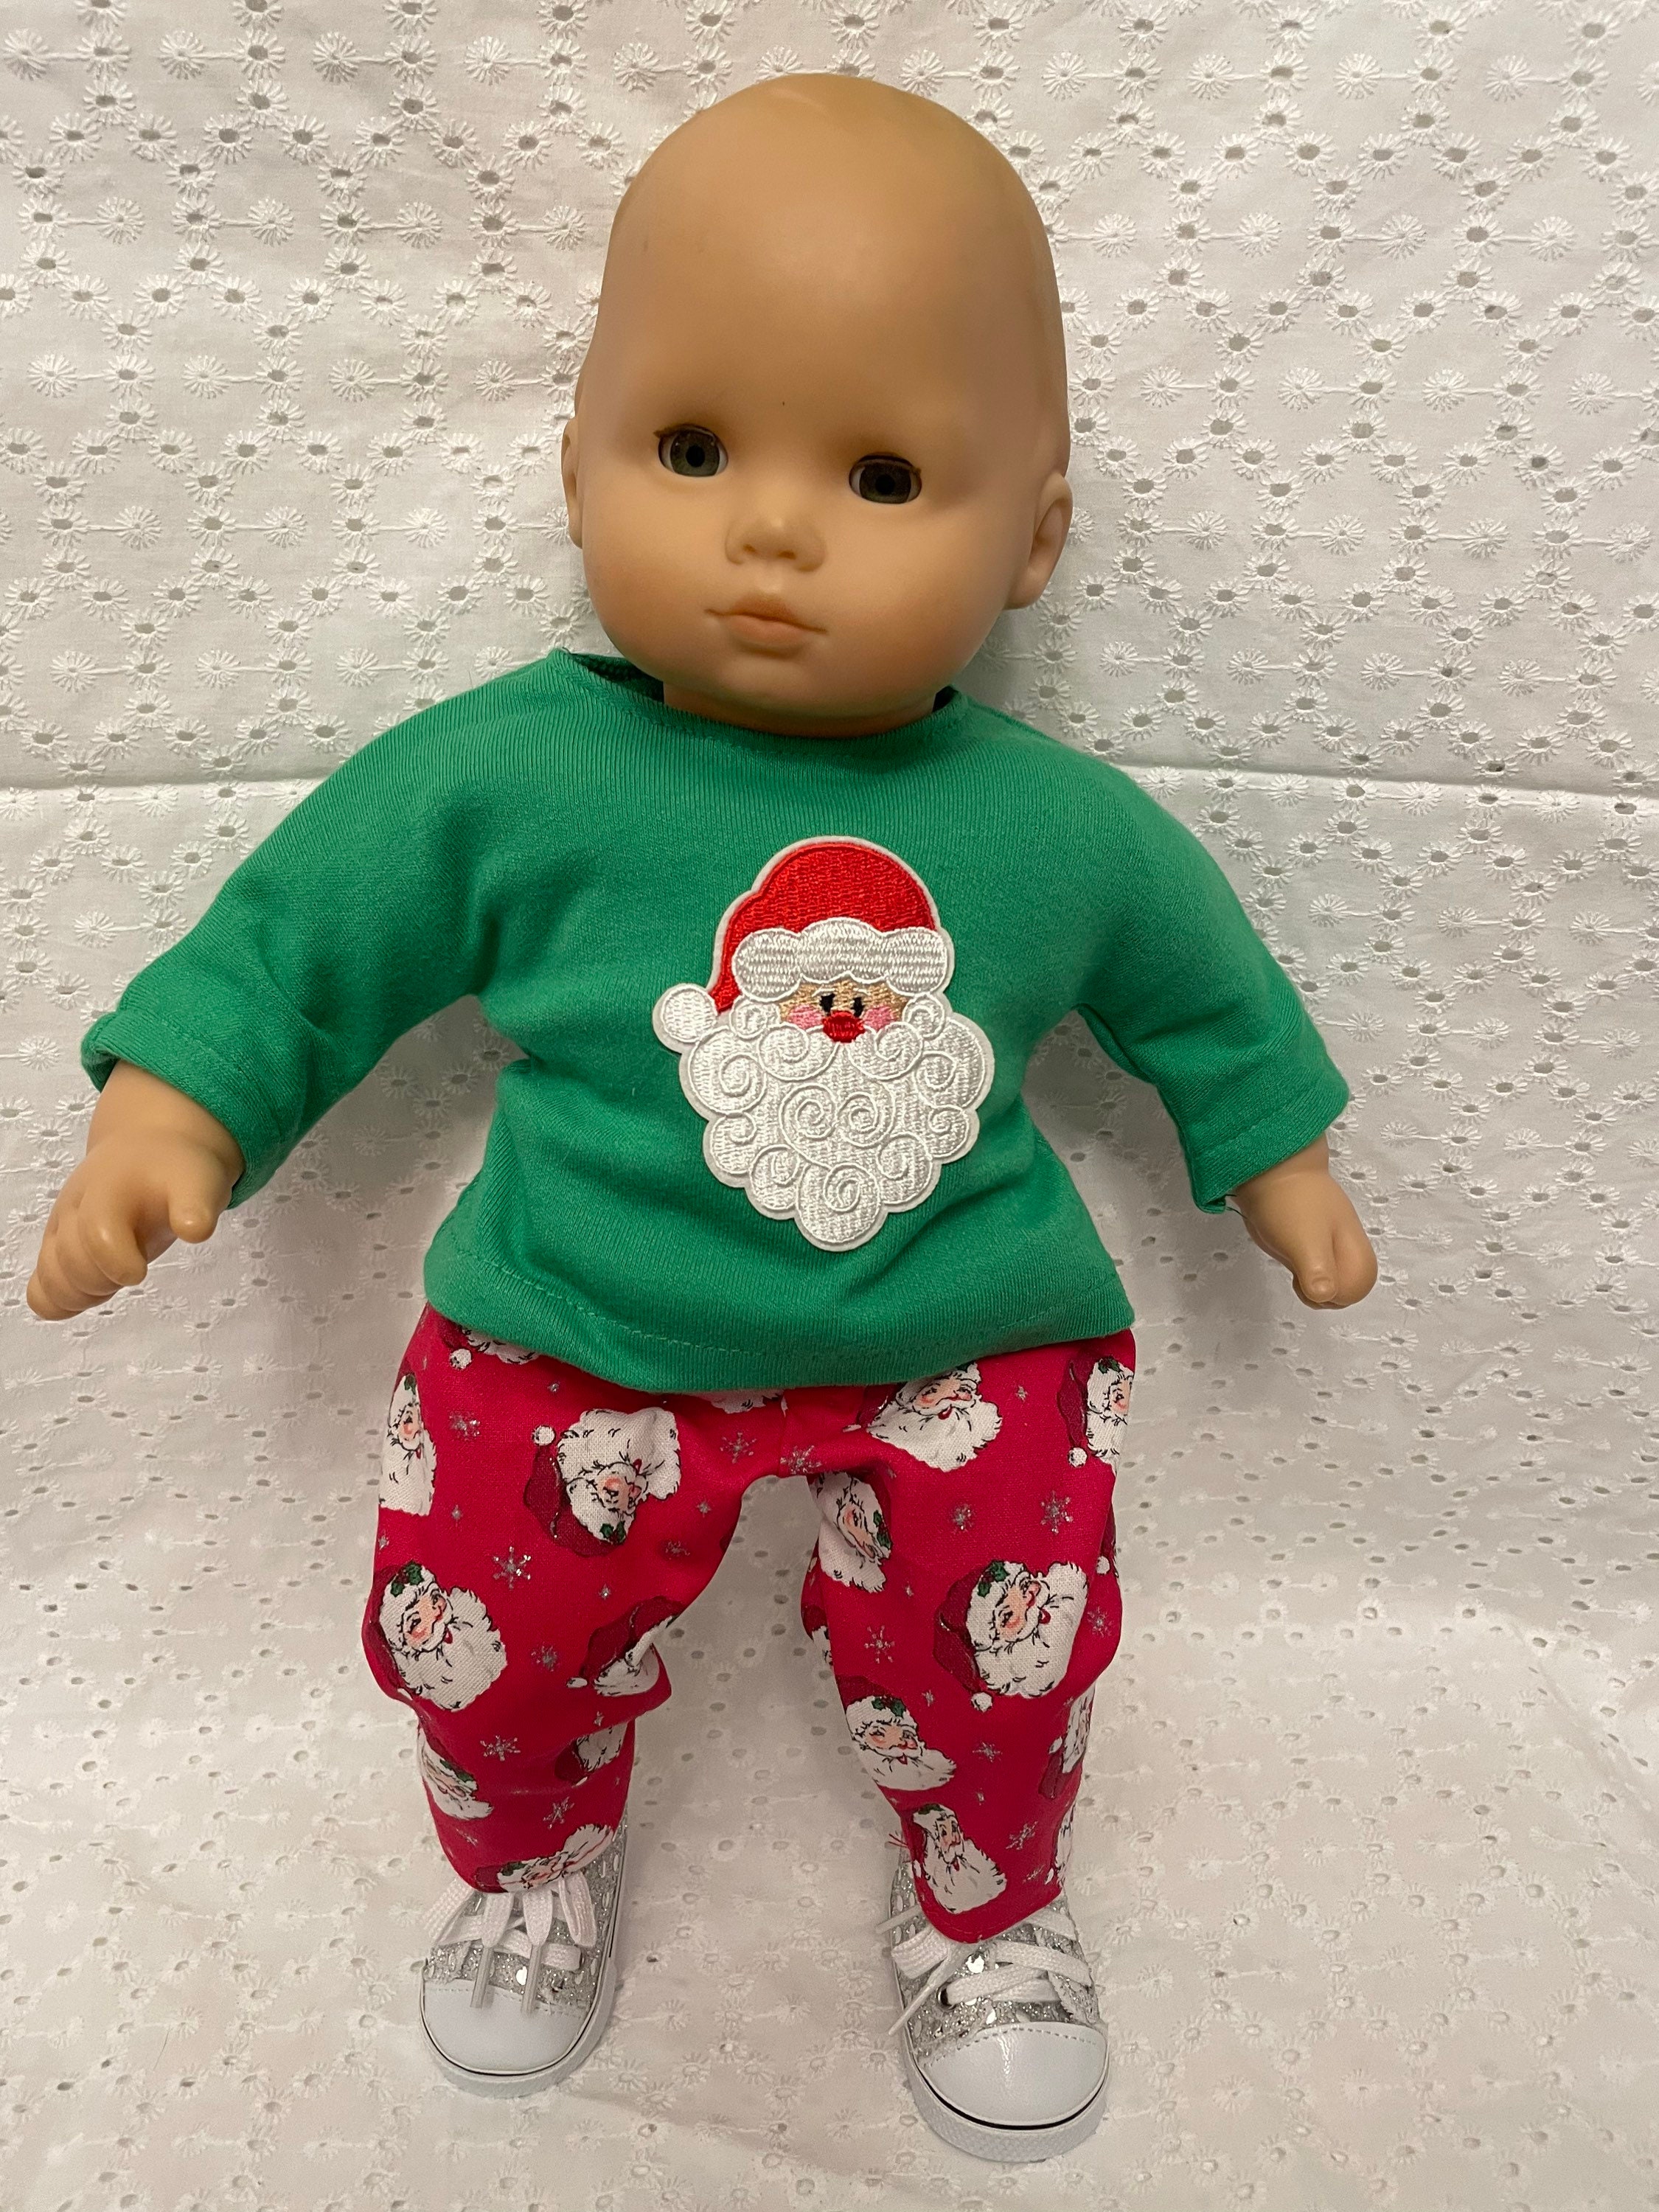 American Girl Bitty Baby Ruffled Polar Bear Pajamas for dolls